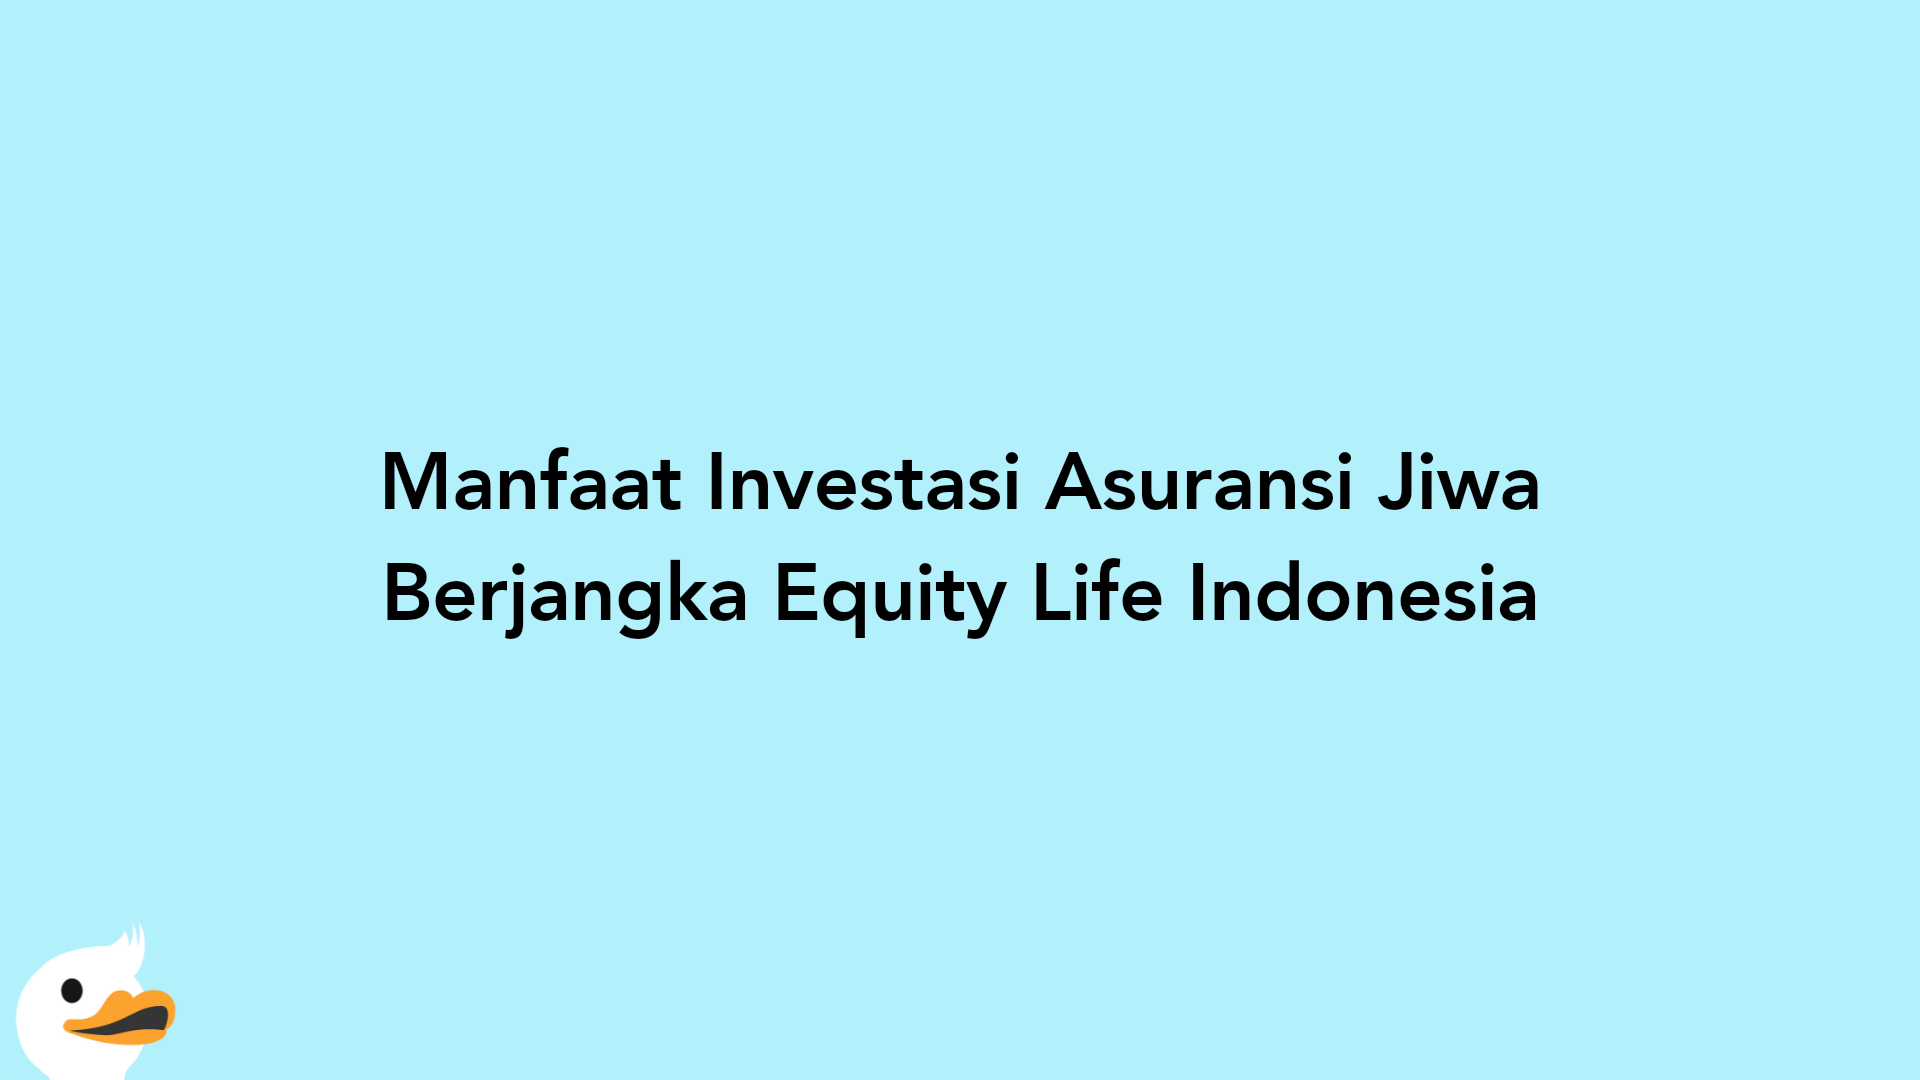 Manfaat Investasi Asuransi Jiwa Berjangka Equity Life Indonesia